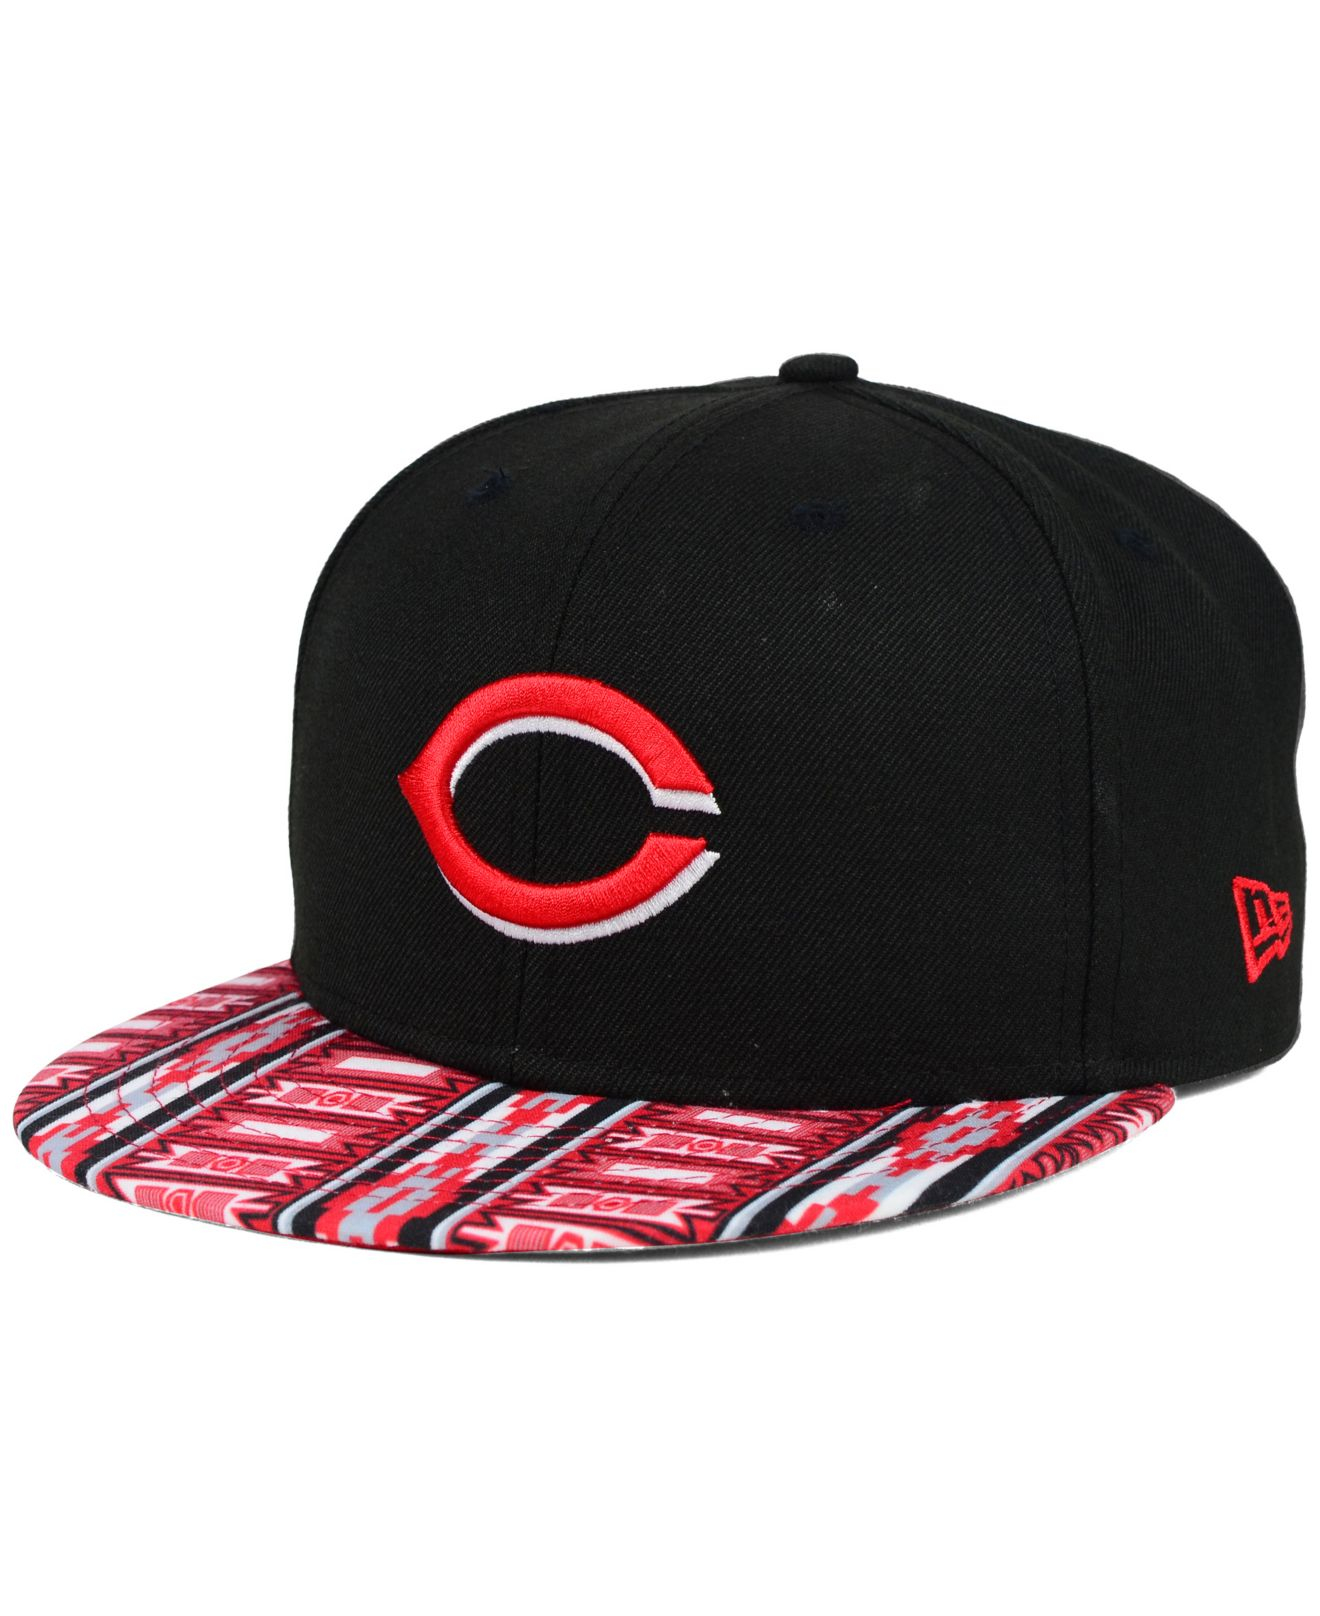 Cincinnati Reds Snapback Hats